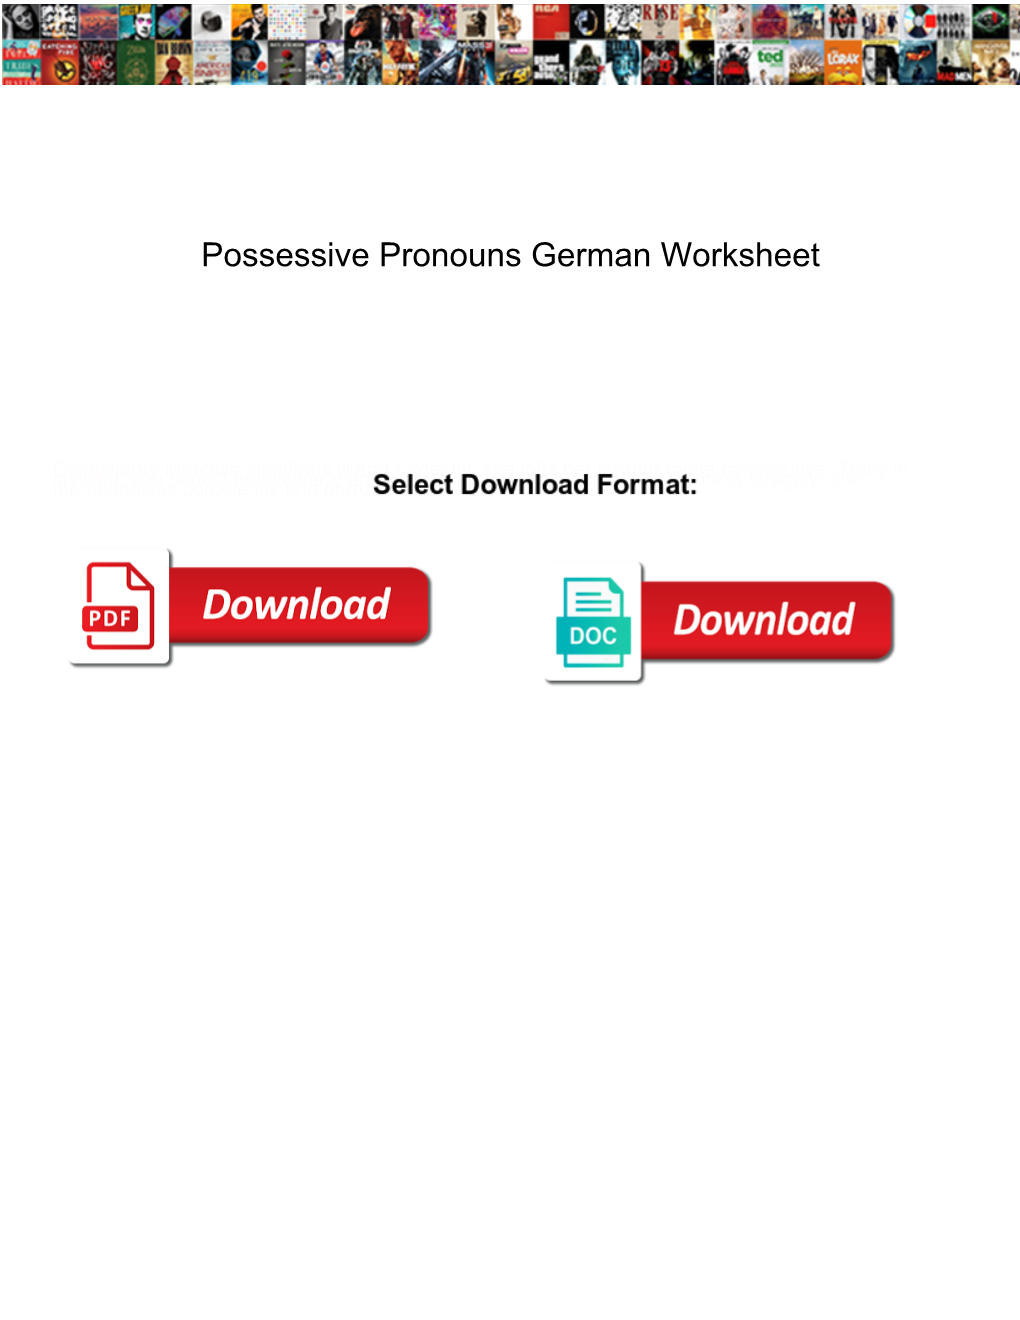 possessive-pronouns-german-worksheet-docslib